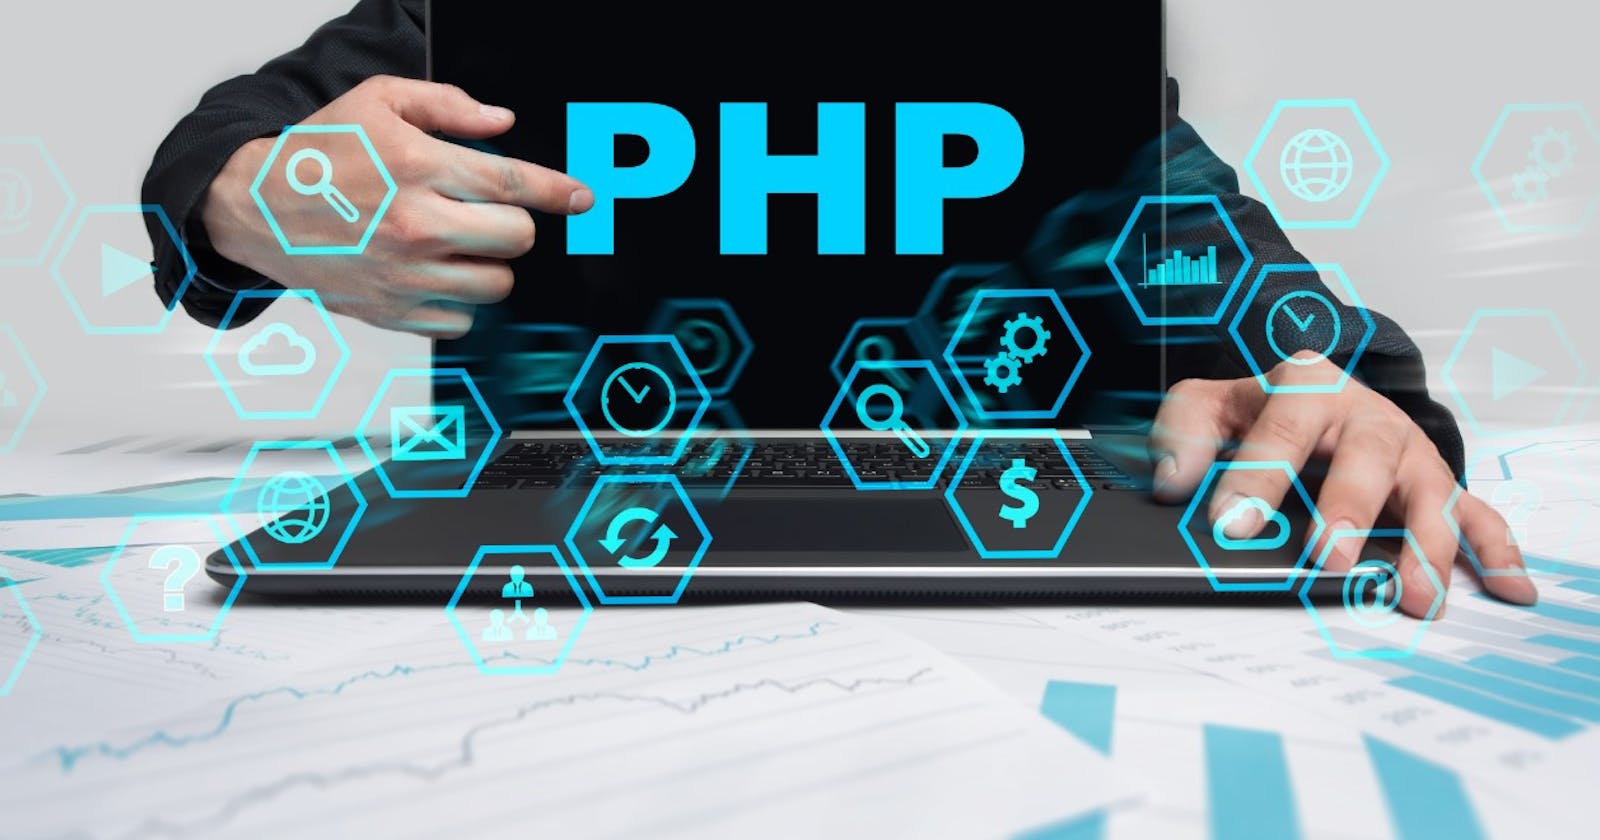 PHP (Hypertext Preprocessor) History